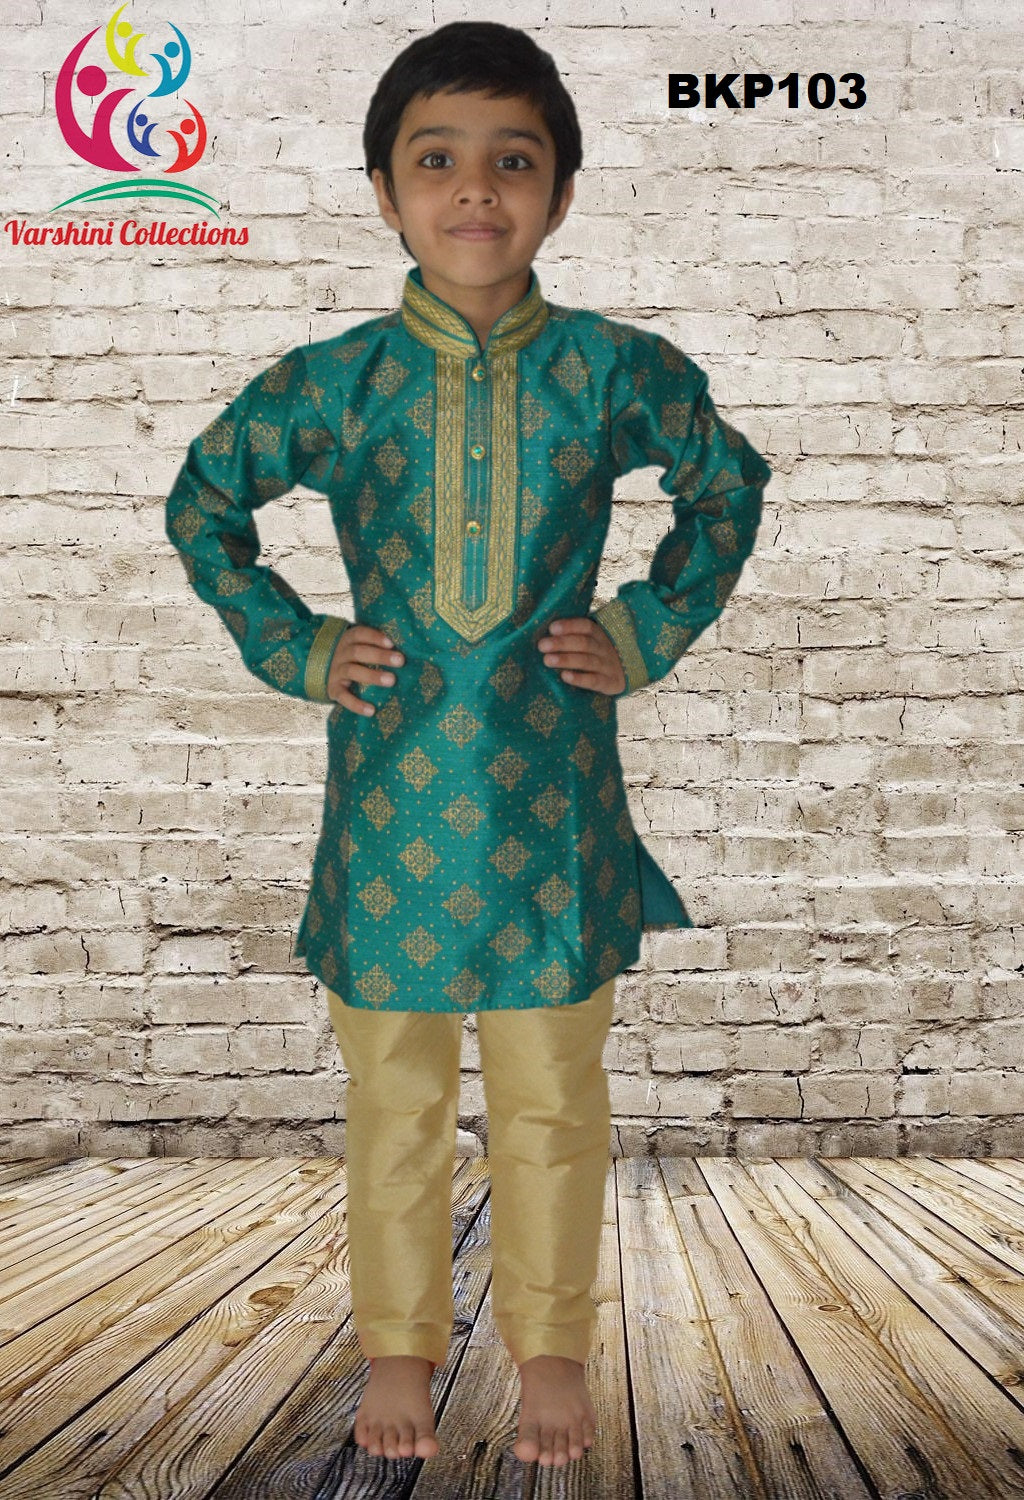 BKP103 - Green Silk Kurta Pajama with Gold printed design